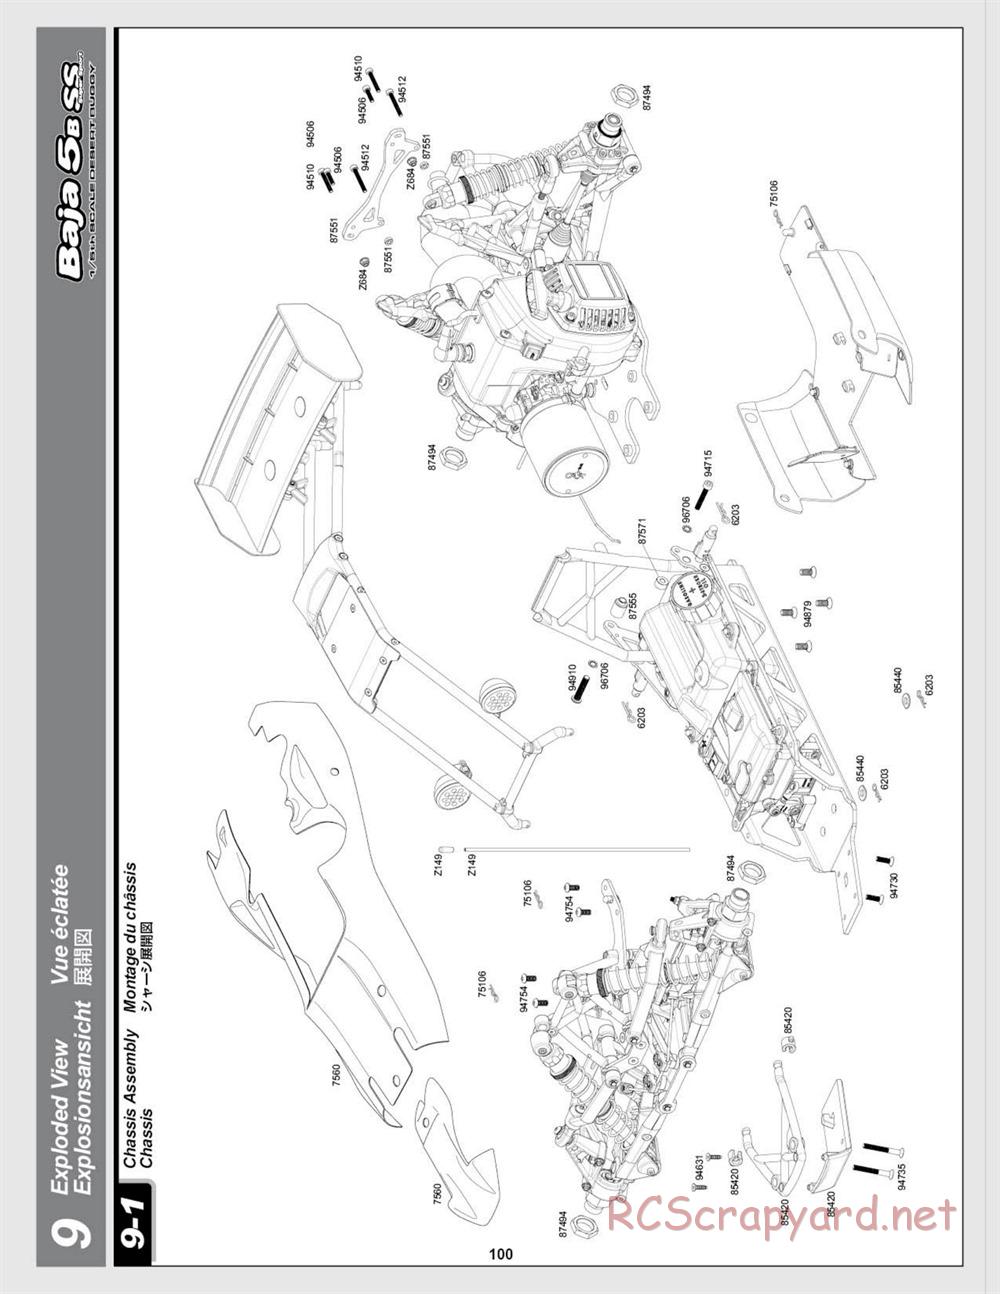 HPI - Baja 5b SS - Manual - Page 100